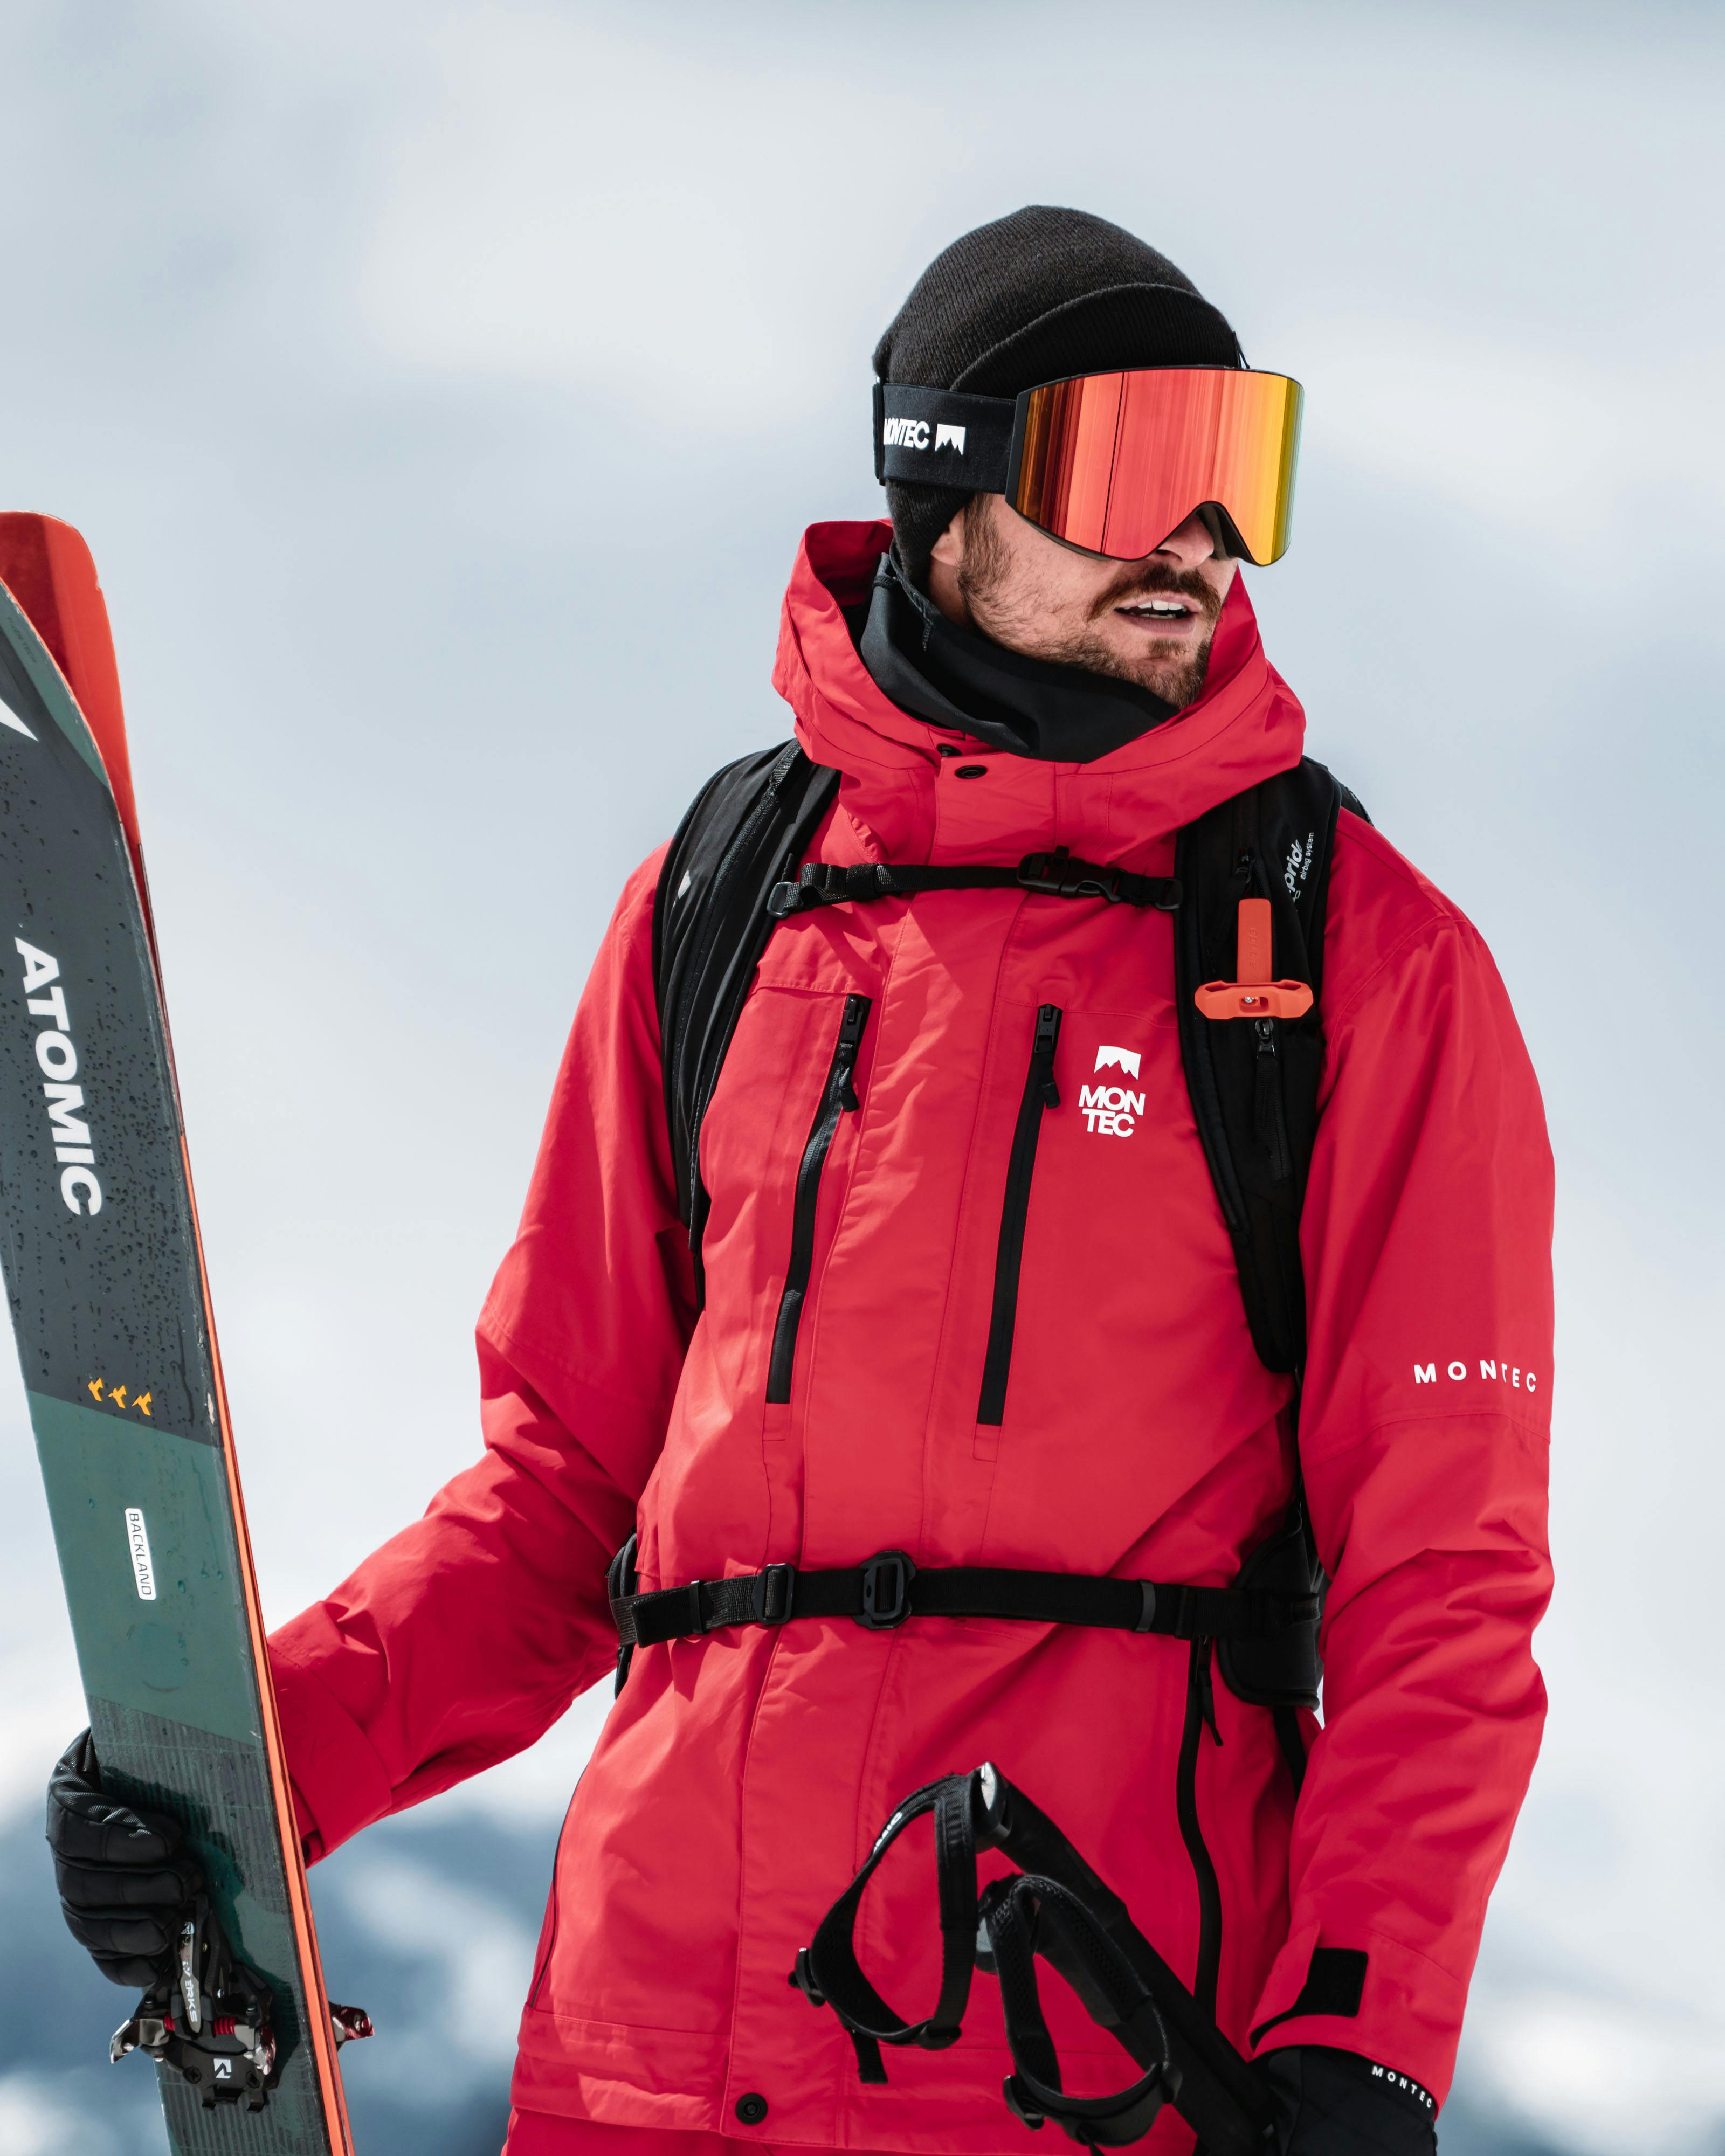 Choosing your ski length based on height